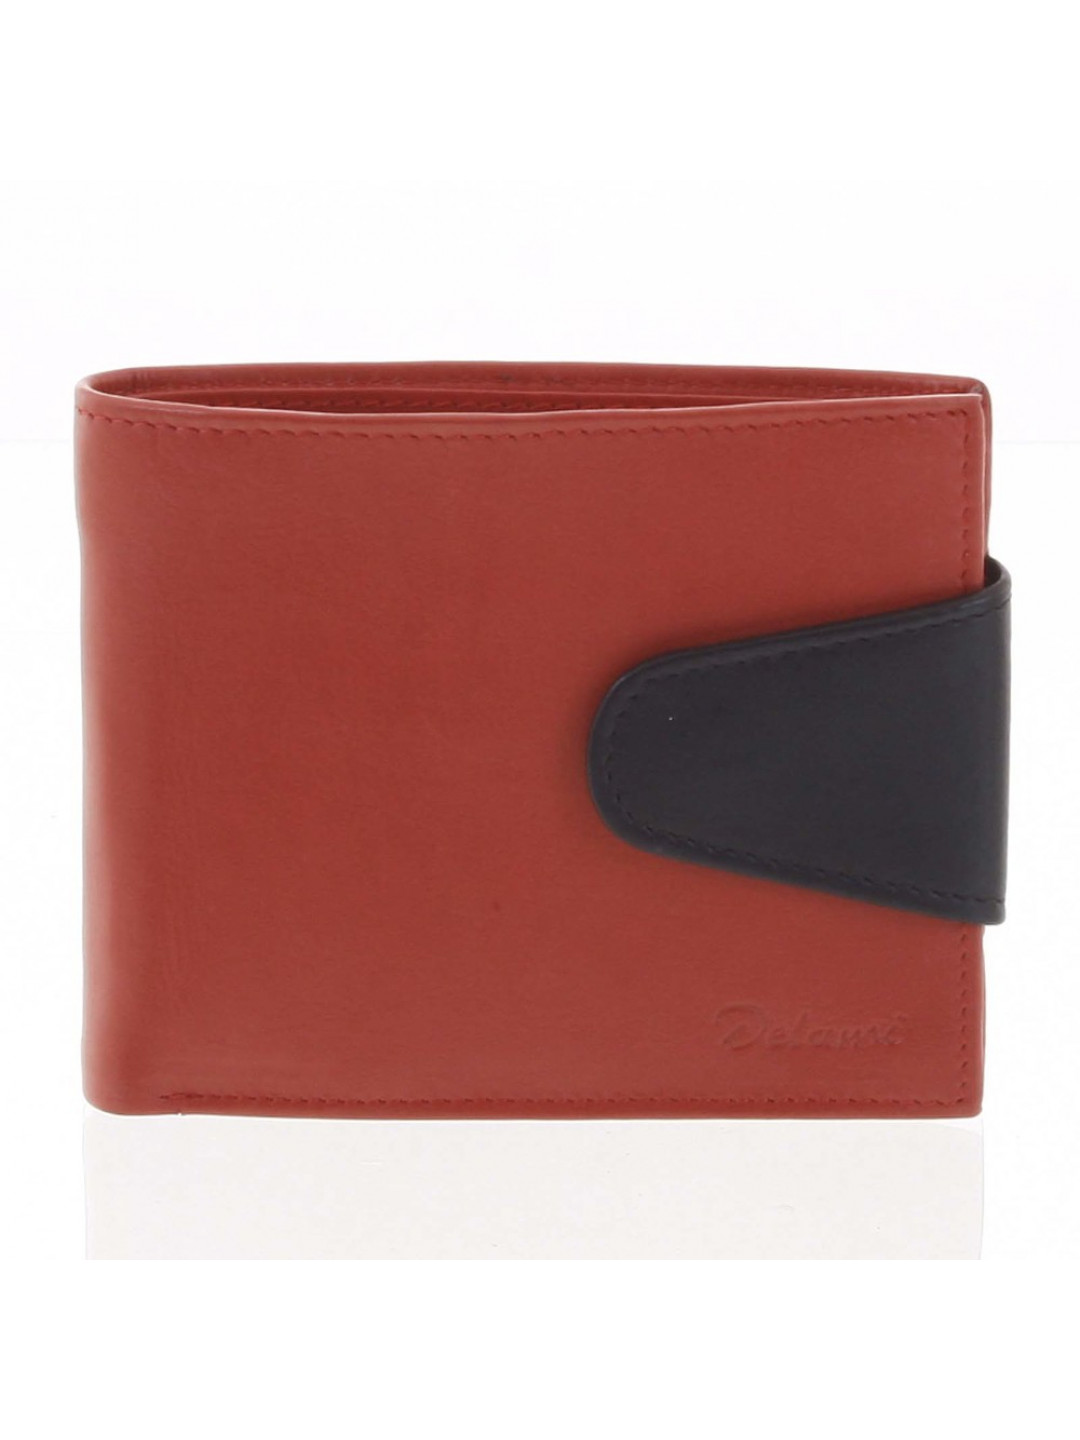 Pánská kožená peněženka Delami Ryan červeno černá